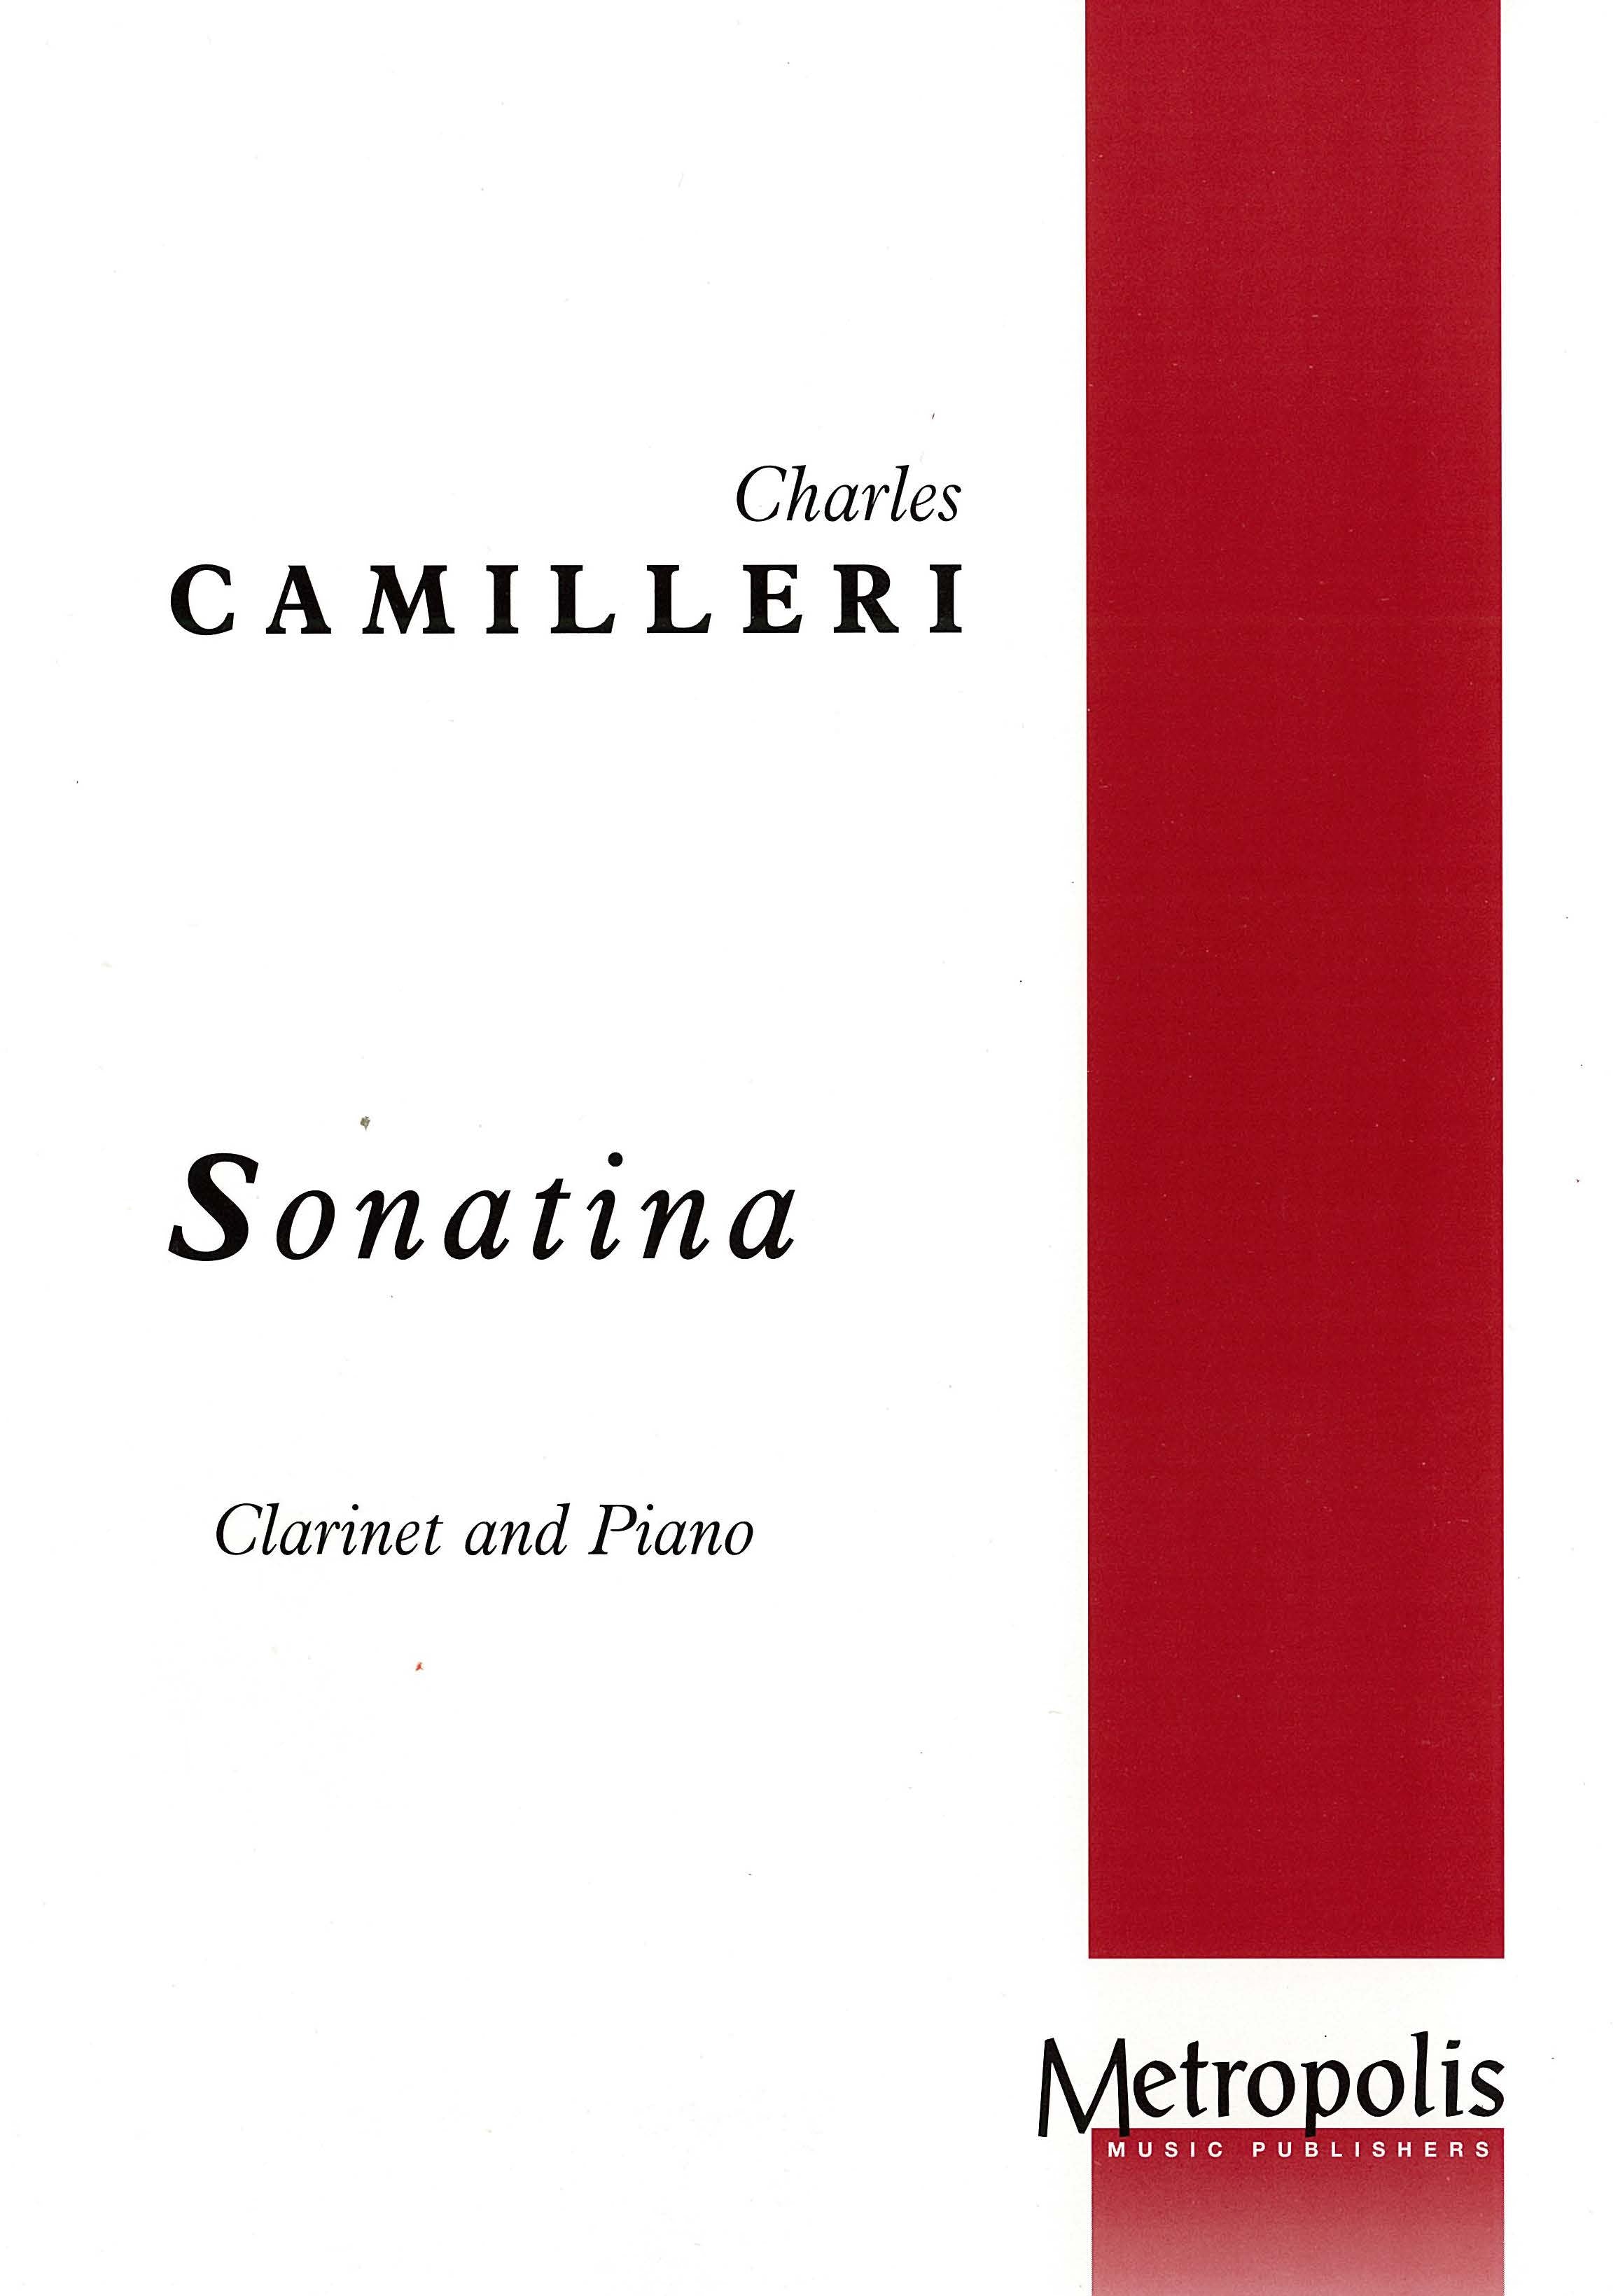 Camilleri - Sonatina for Clarinet and Piano